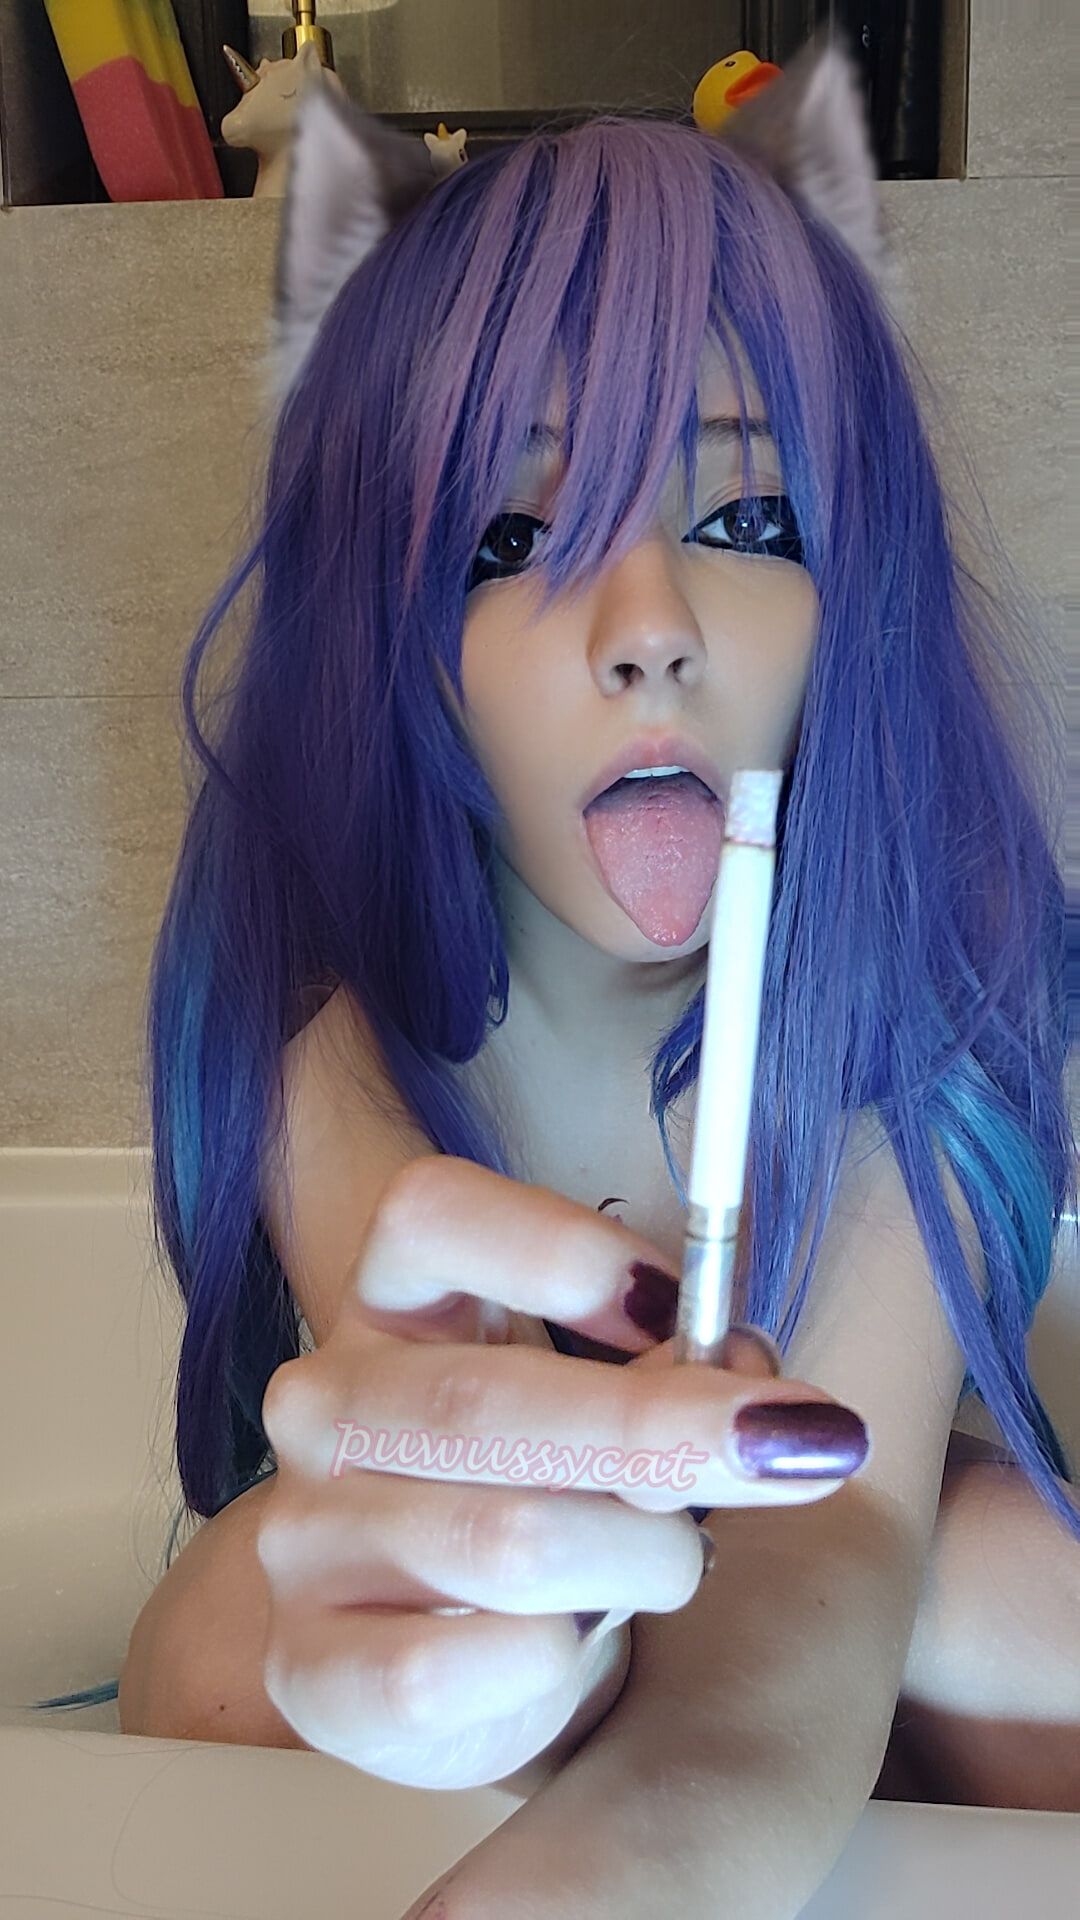 Egirl smoking in bathtub #7